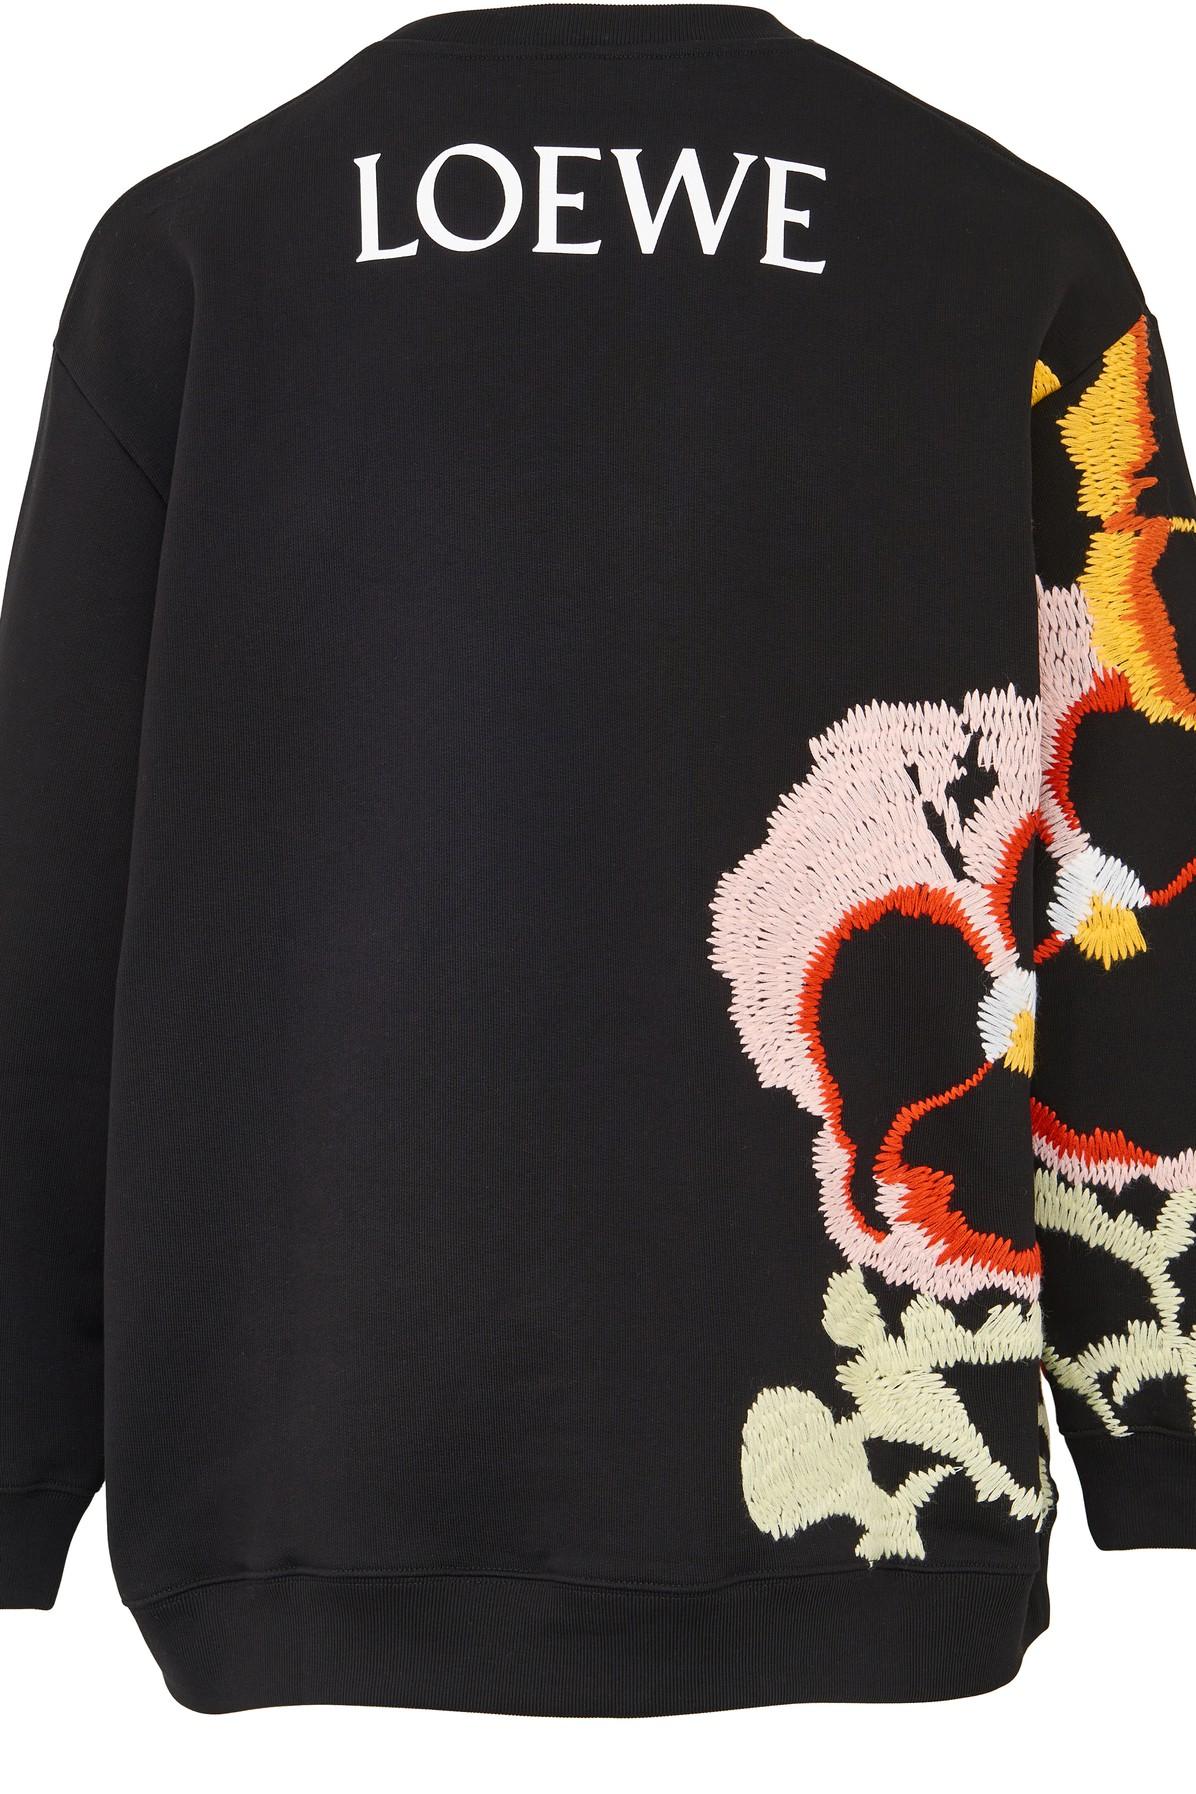 Loewe Floral Sweater in Black_multicolor (Black) for Men | Lyst